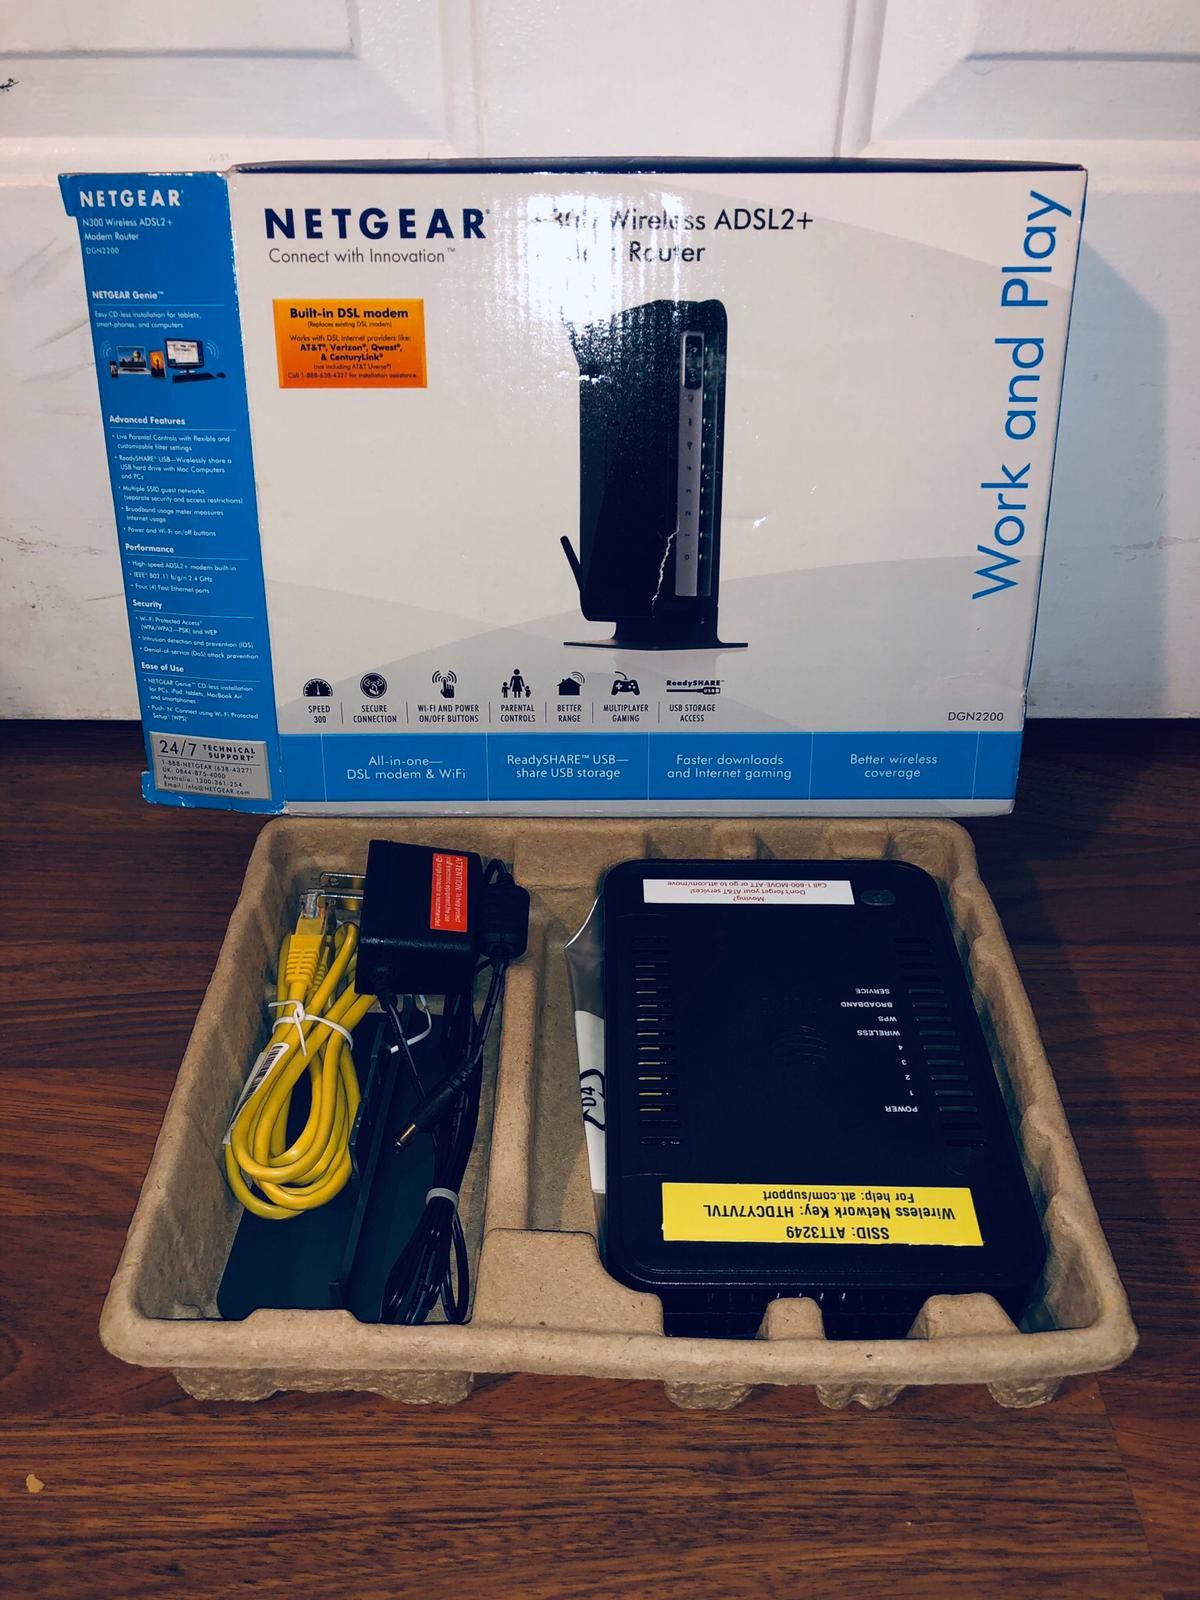 Netgear ADSL2 modem like New - como nuevo $45.00 OBO - MEJOR OFERTA